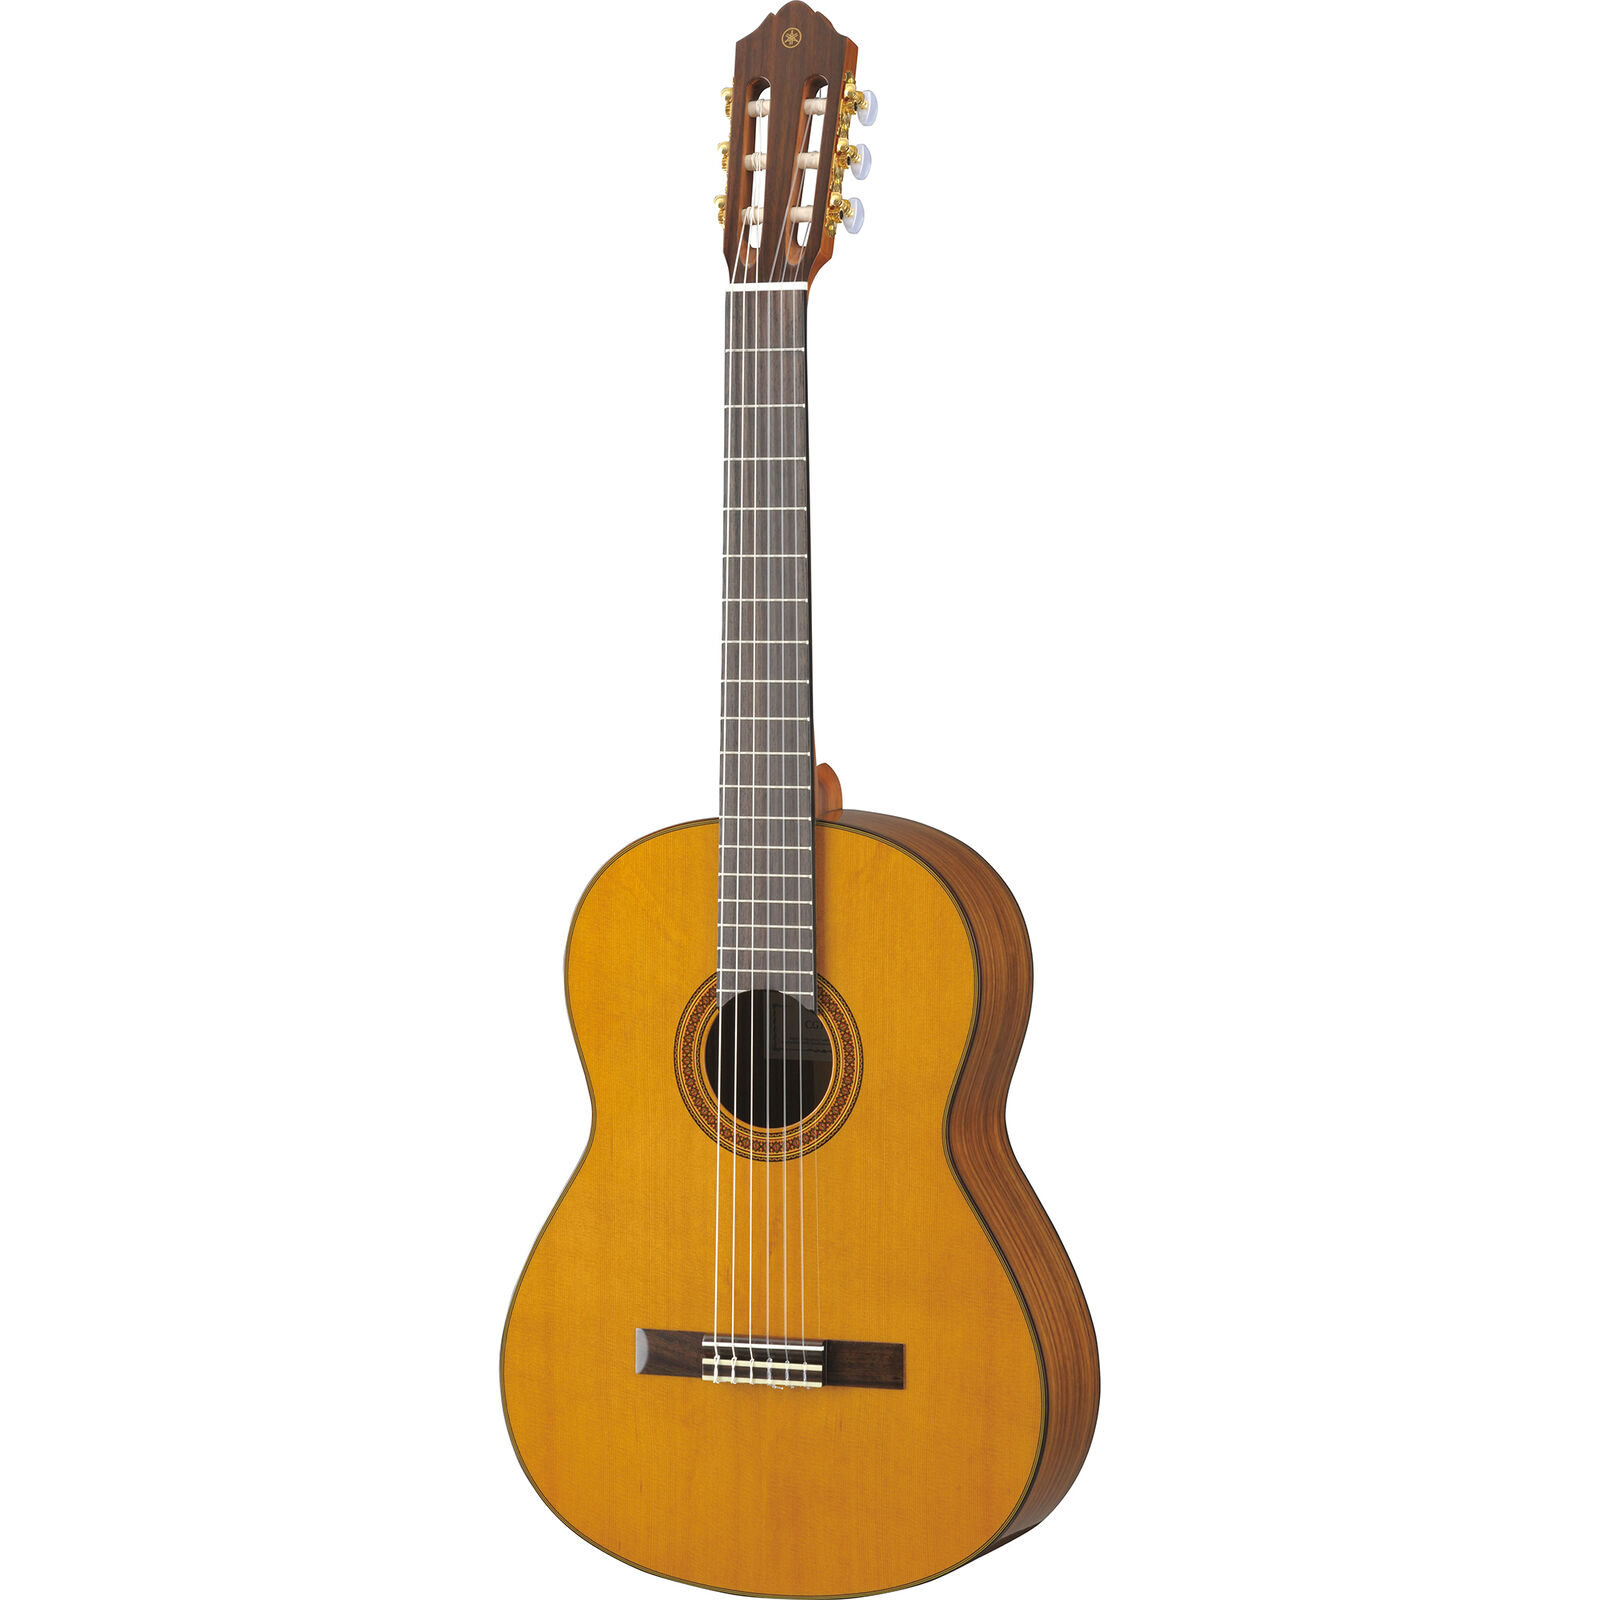 Yamaha CG162C Nylon-String Classical Guitar, Ovangkol, Western Red Cedar Top